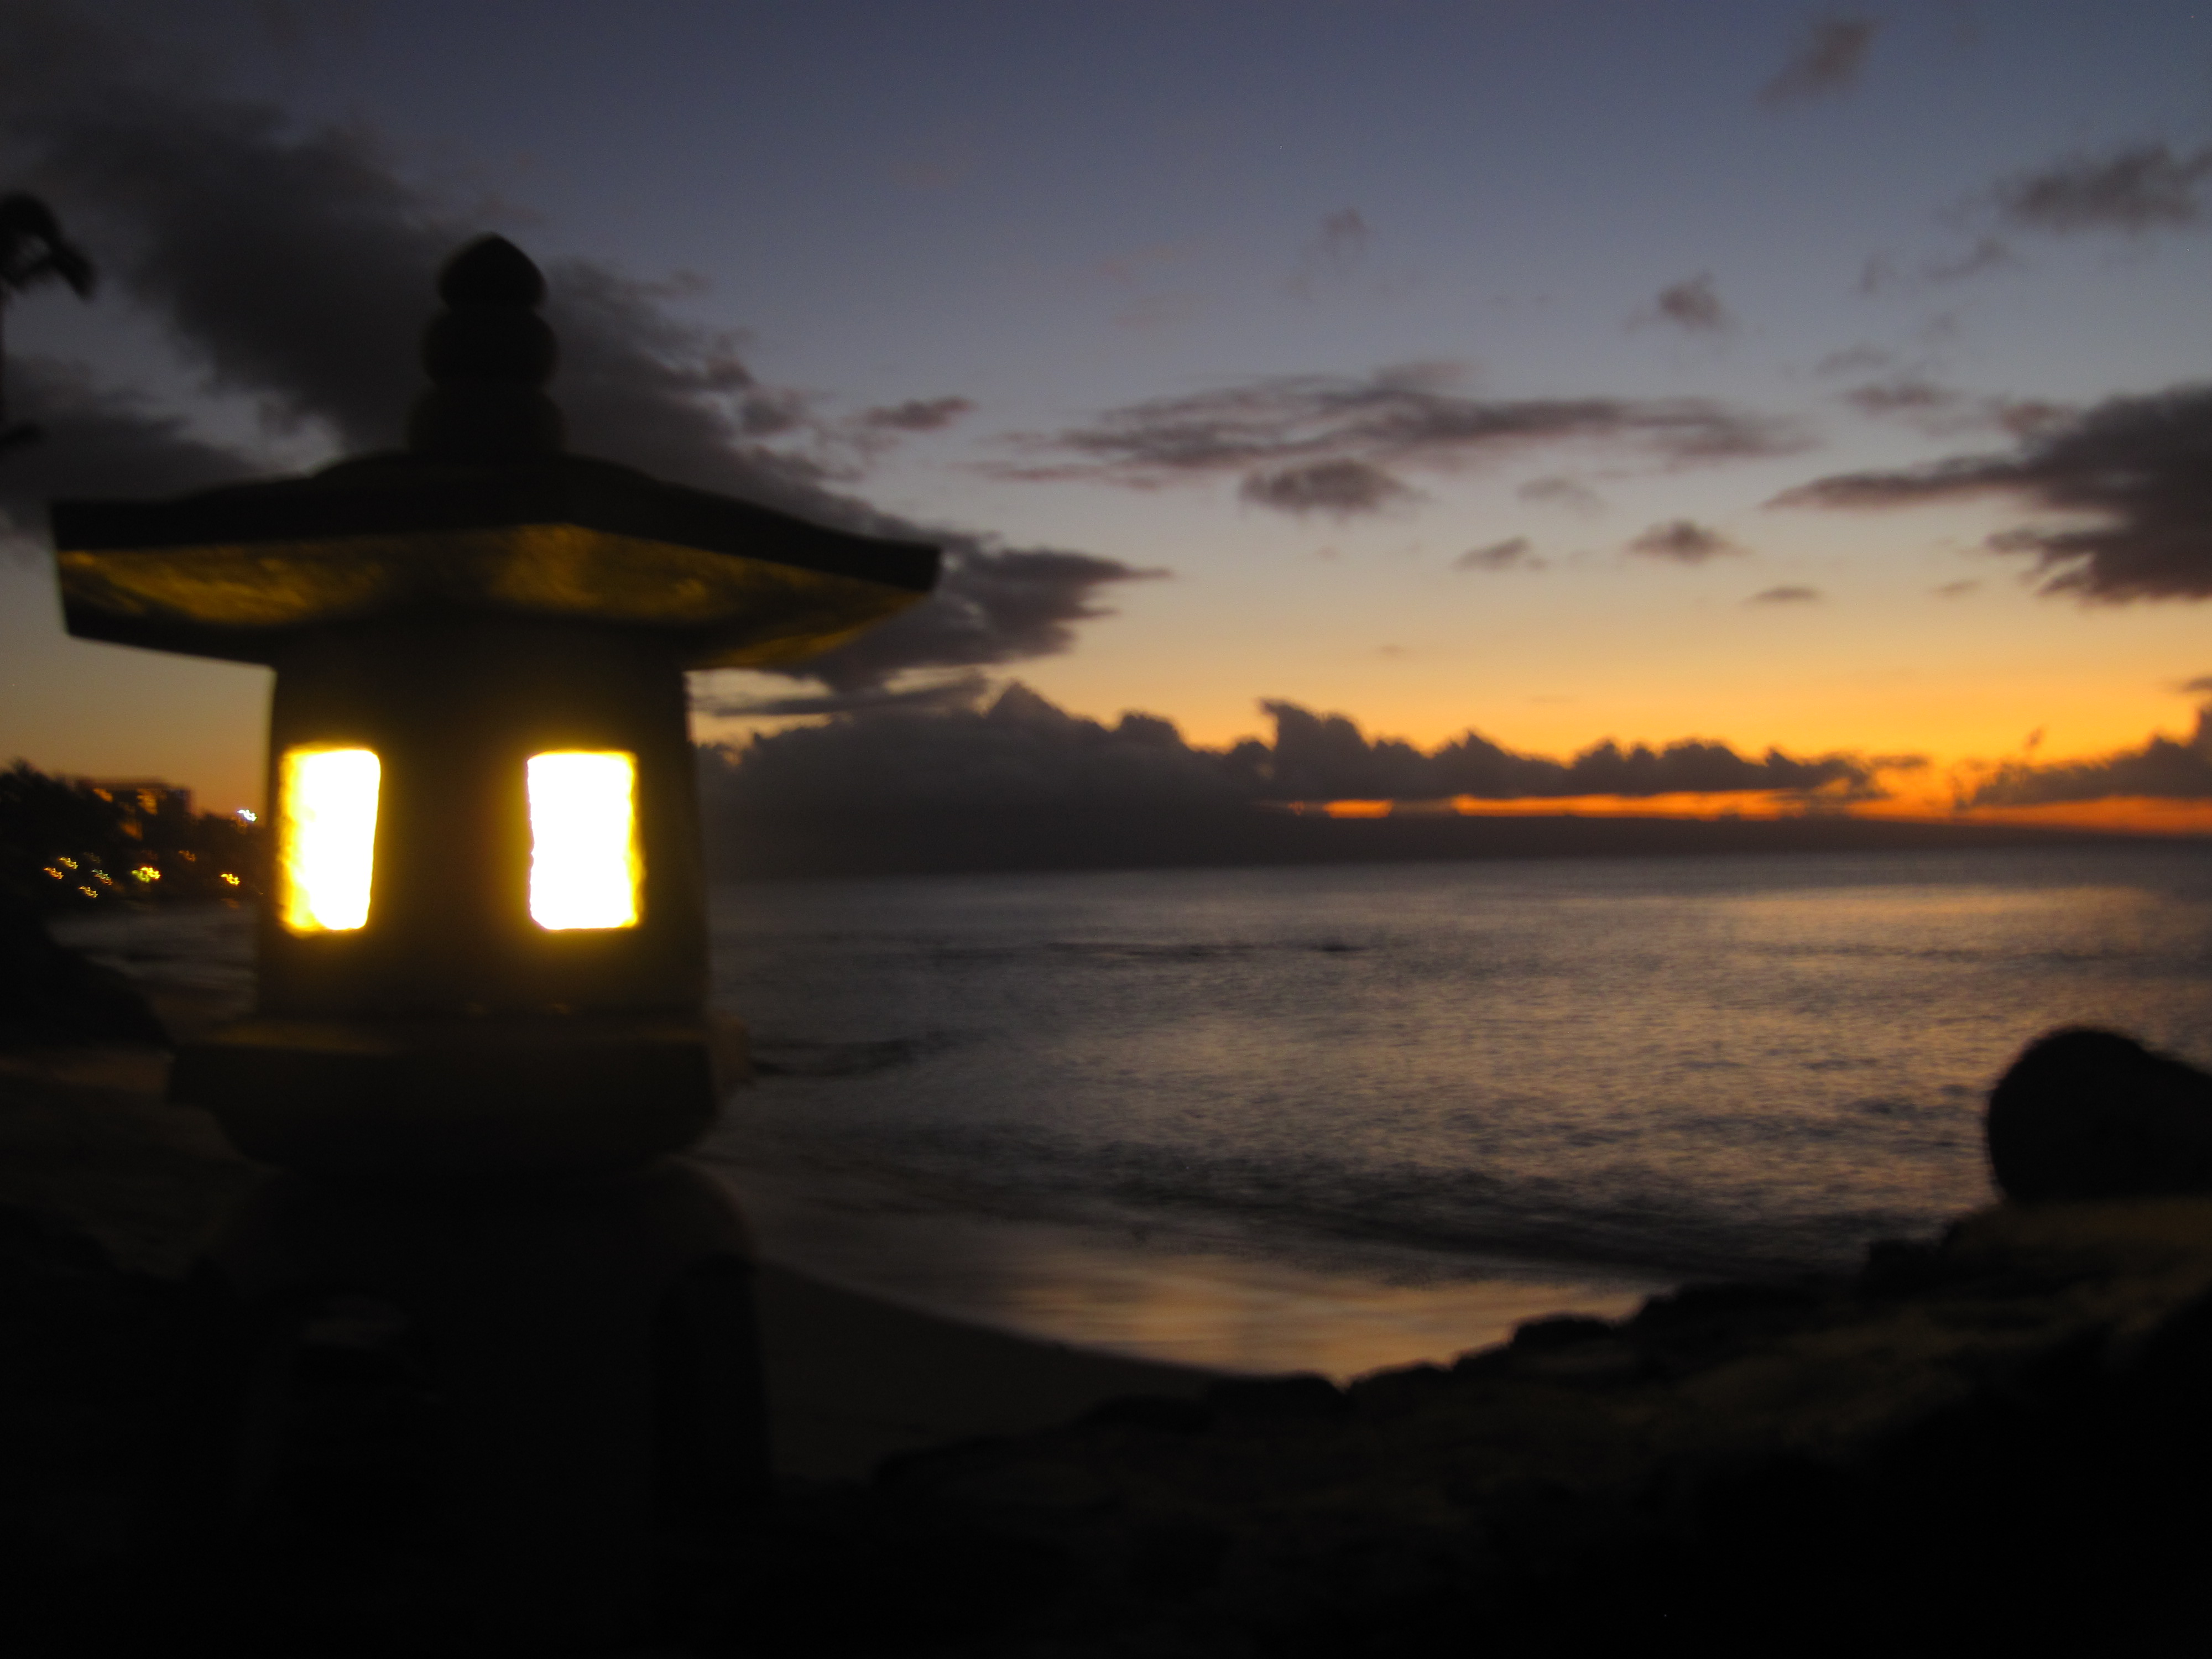 Hale Maui's Lamplit Night, Rosy Afterglow